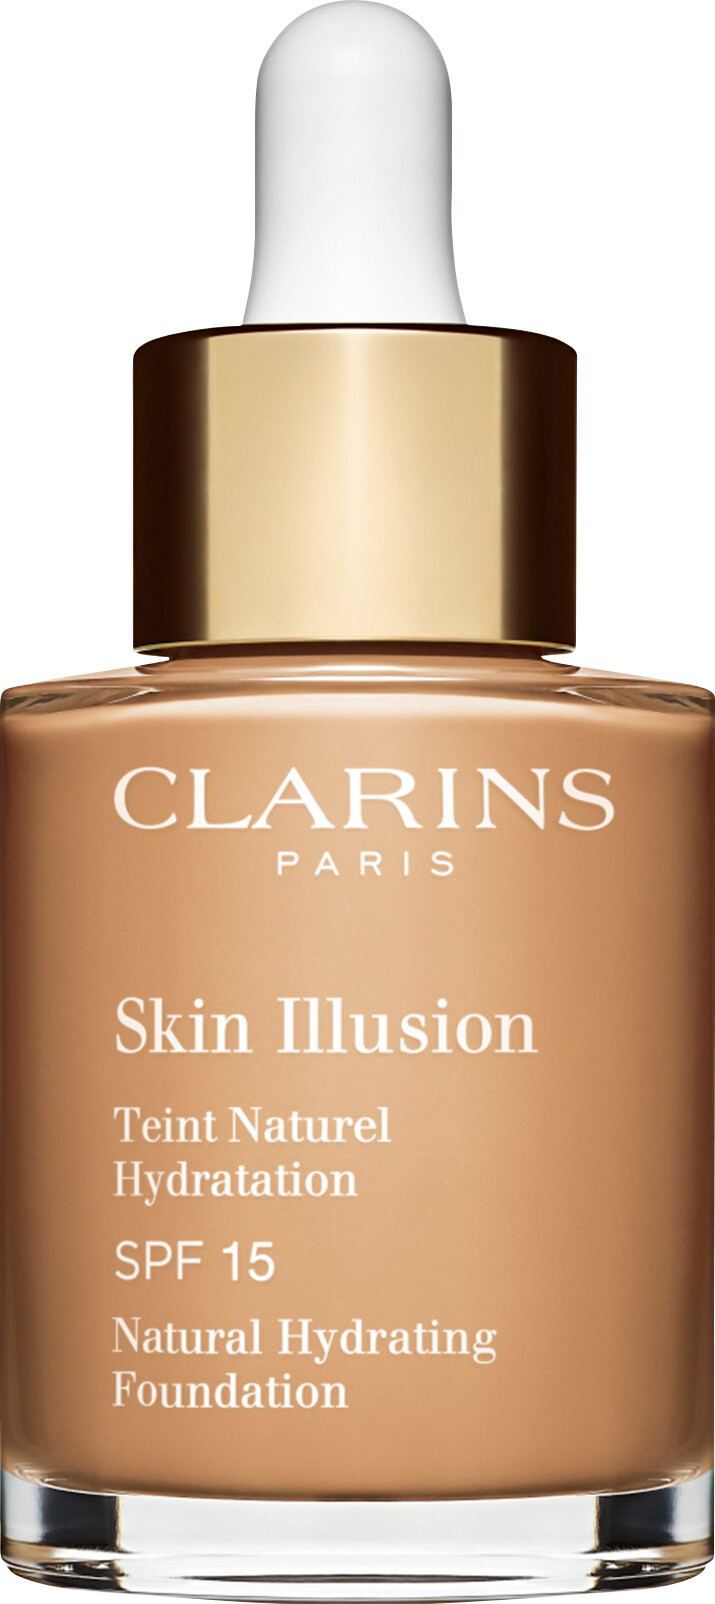 Clarins Skin Illusion Natural Hydrating Foundation SPF15 30ml 111 - Auburn